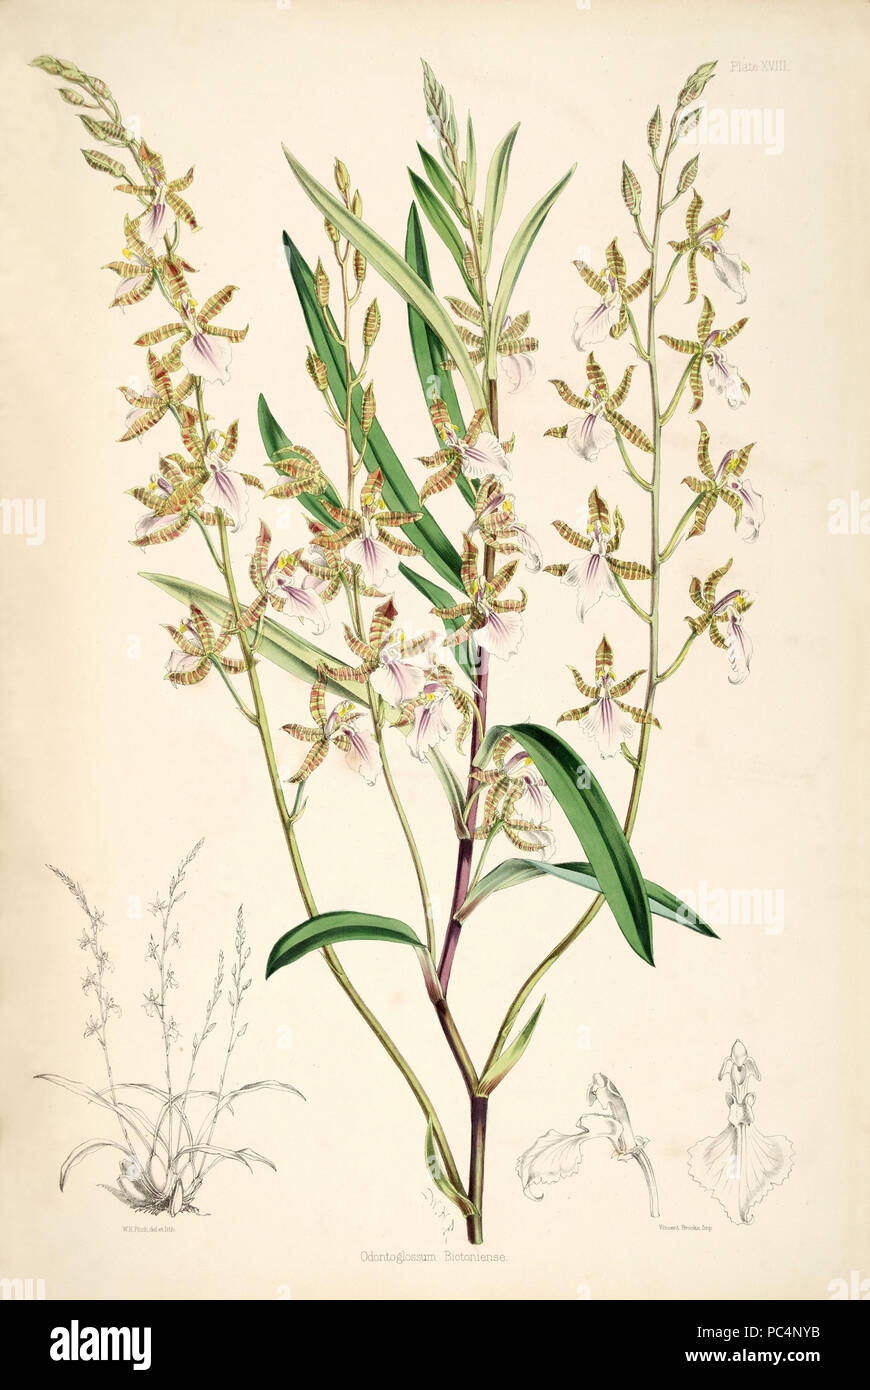 452 Odontoglossum bictoniense (syn Rhynchostele bictoniensis, Lemboglossum bictoniense) - pl. 18 - Bateman, Monogr.Odont Stock Photo